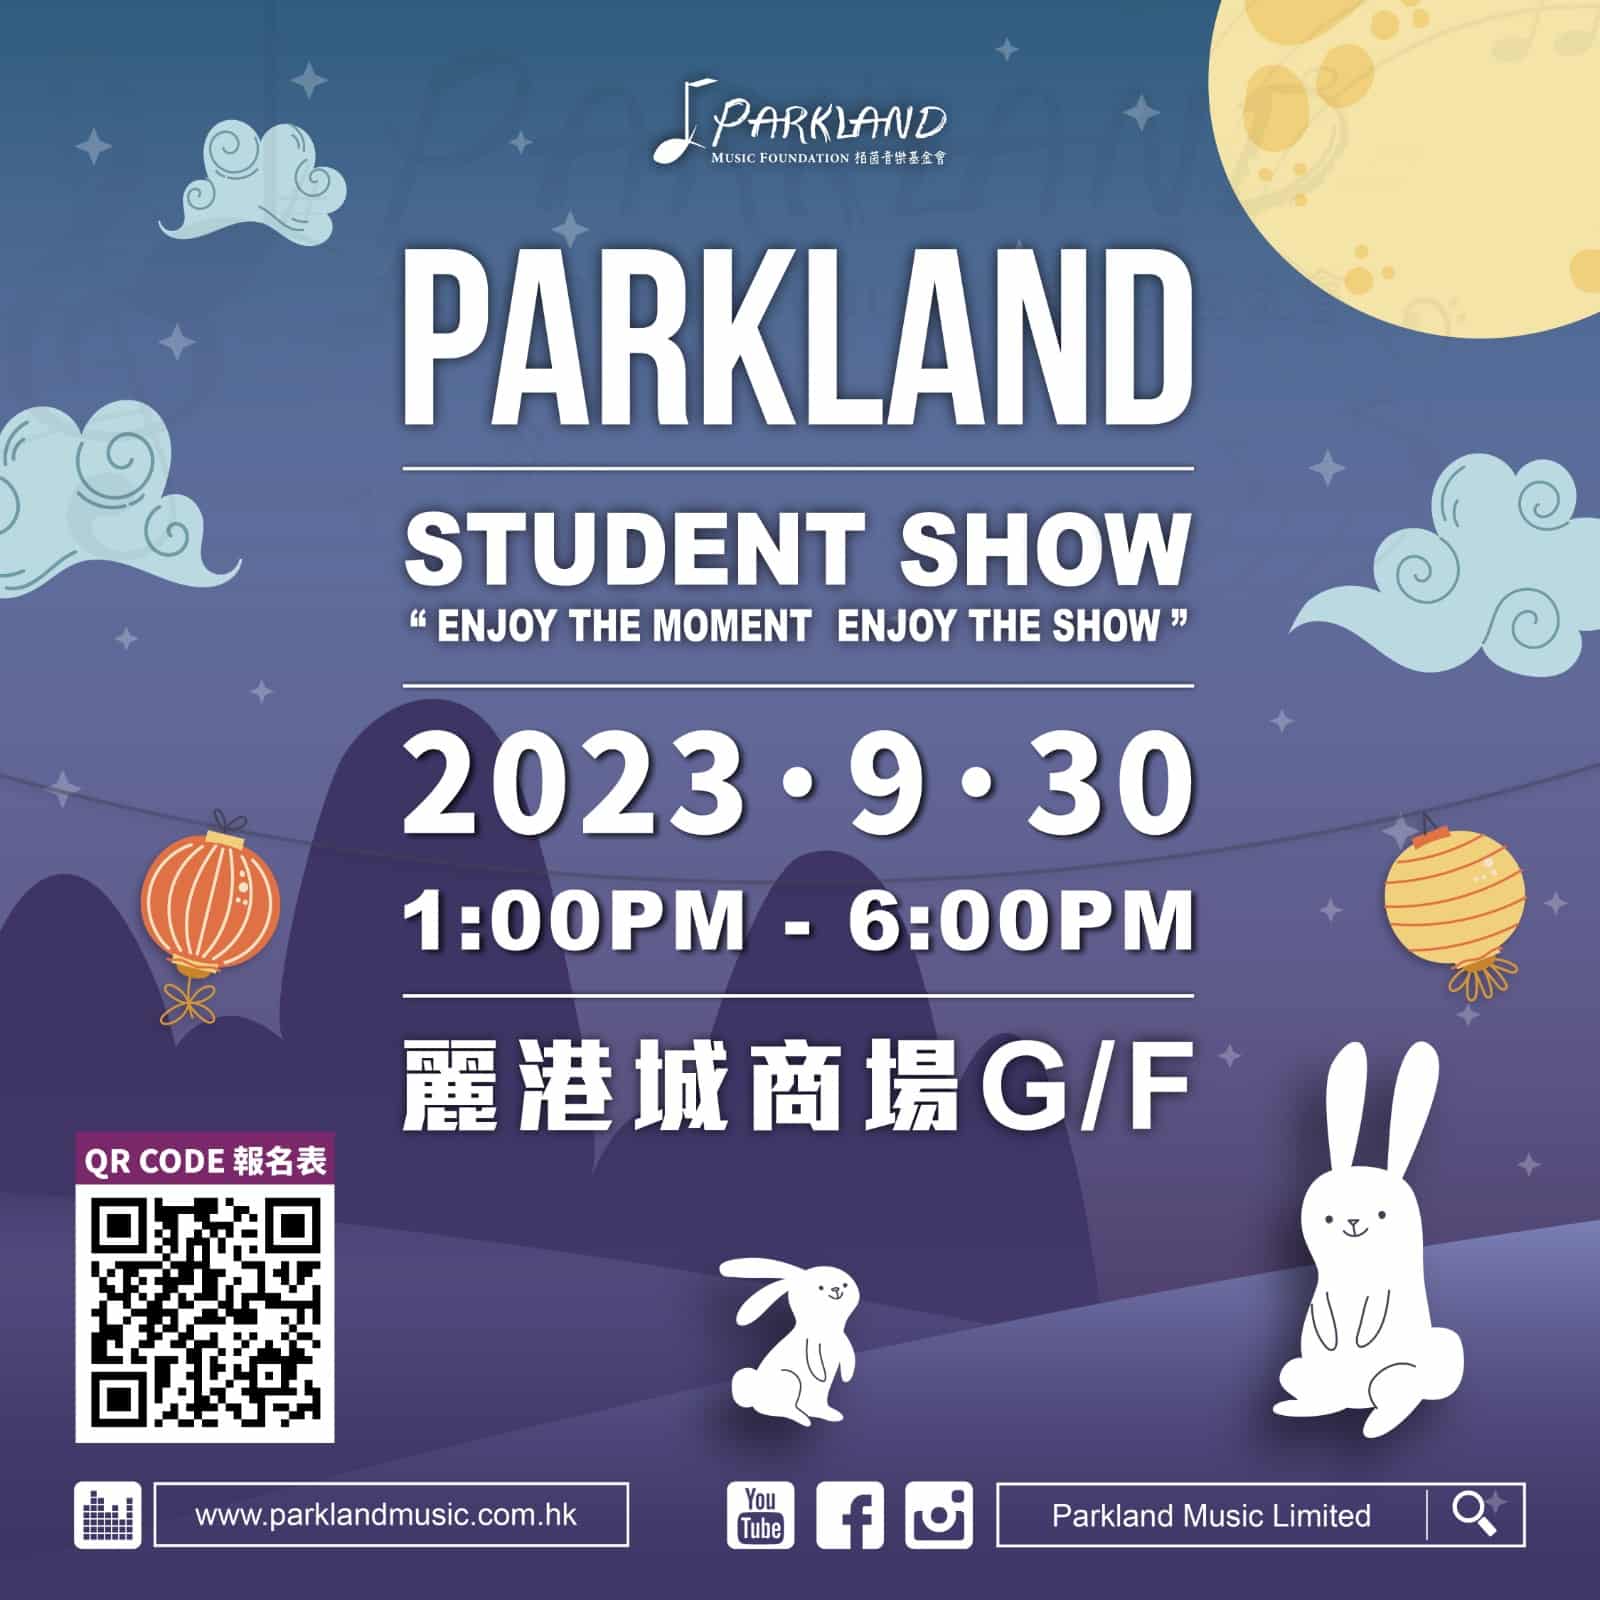 930 Parkland Student Show 2023